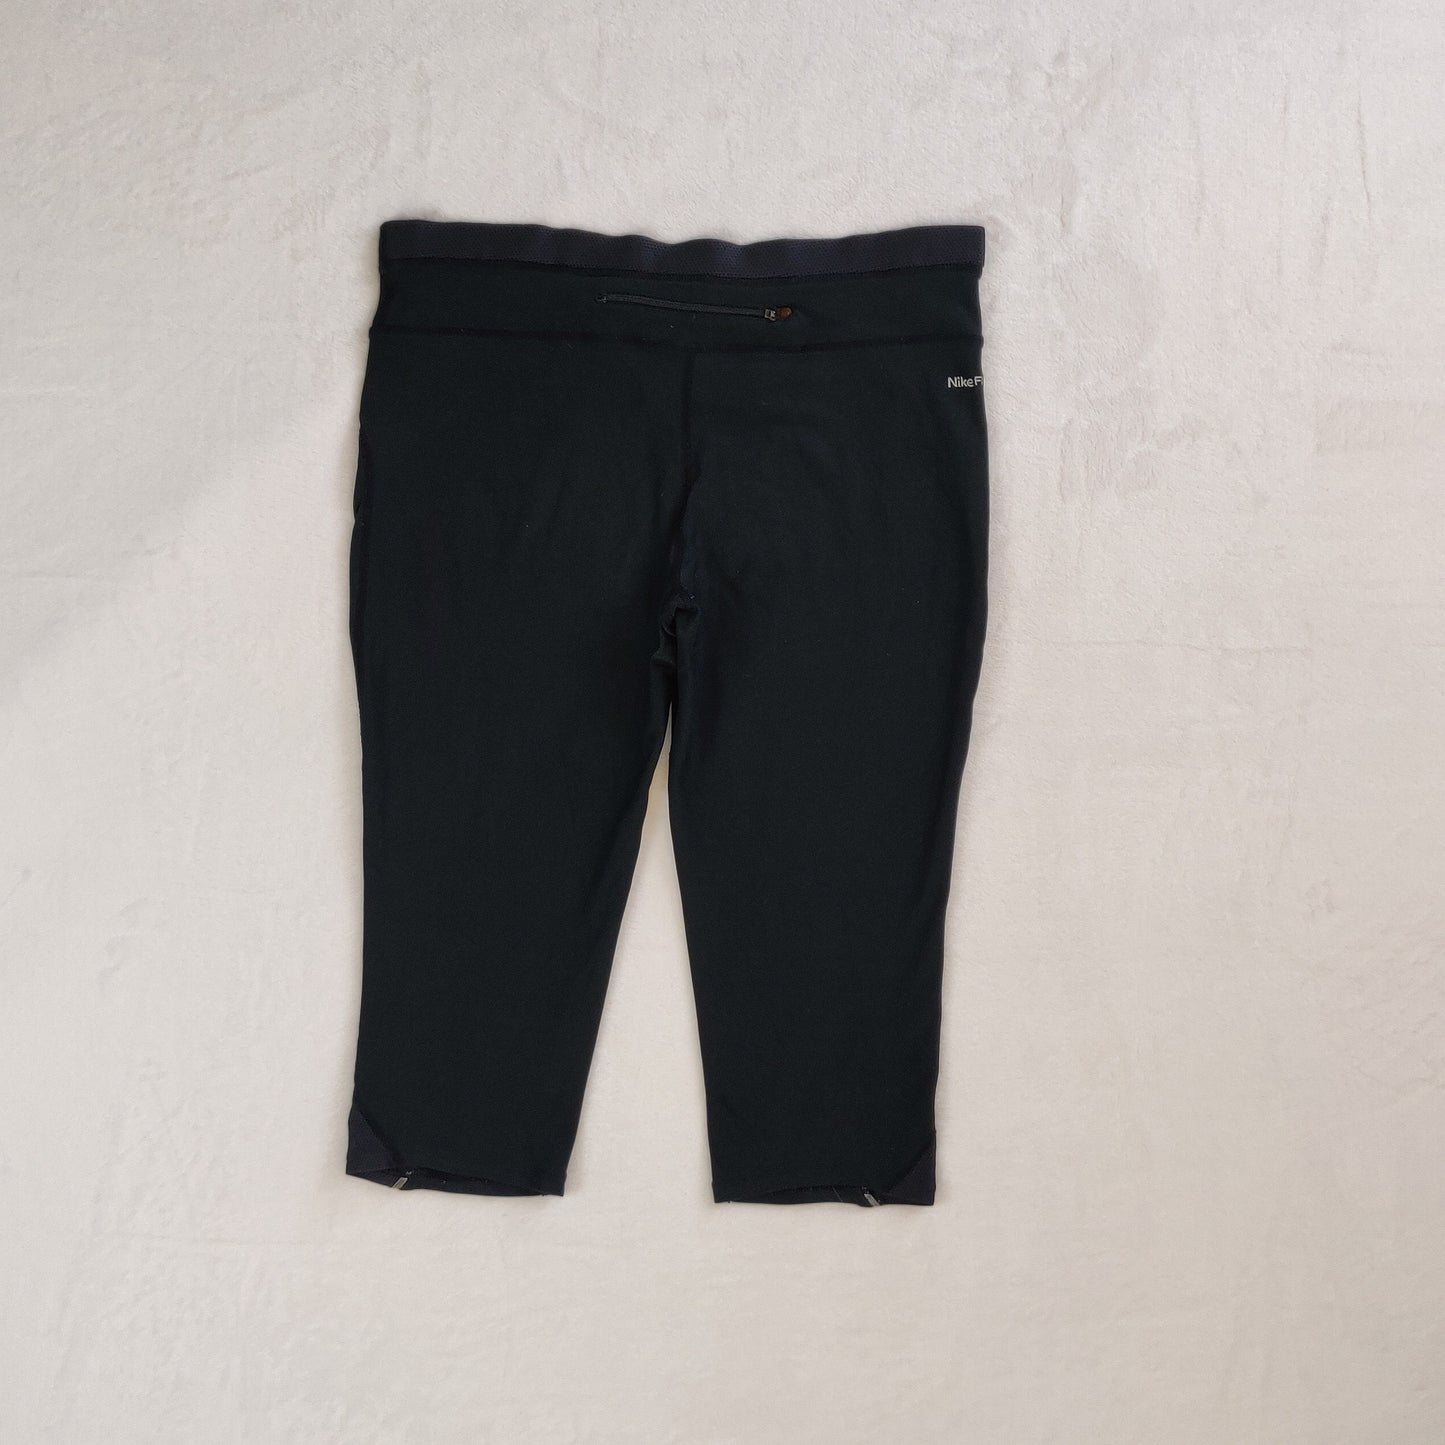 Nike Fit Dry Black Capri Running Yoga Pants Leggings Women Size Medium